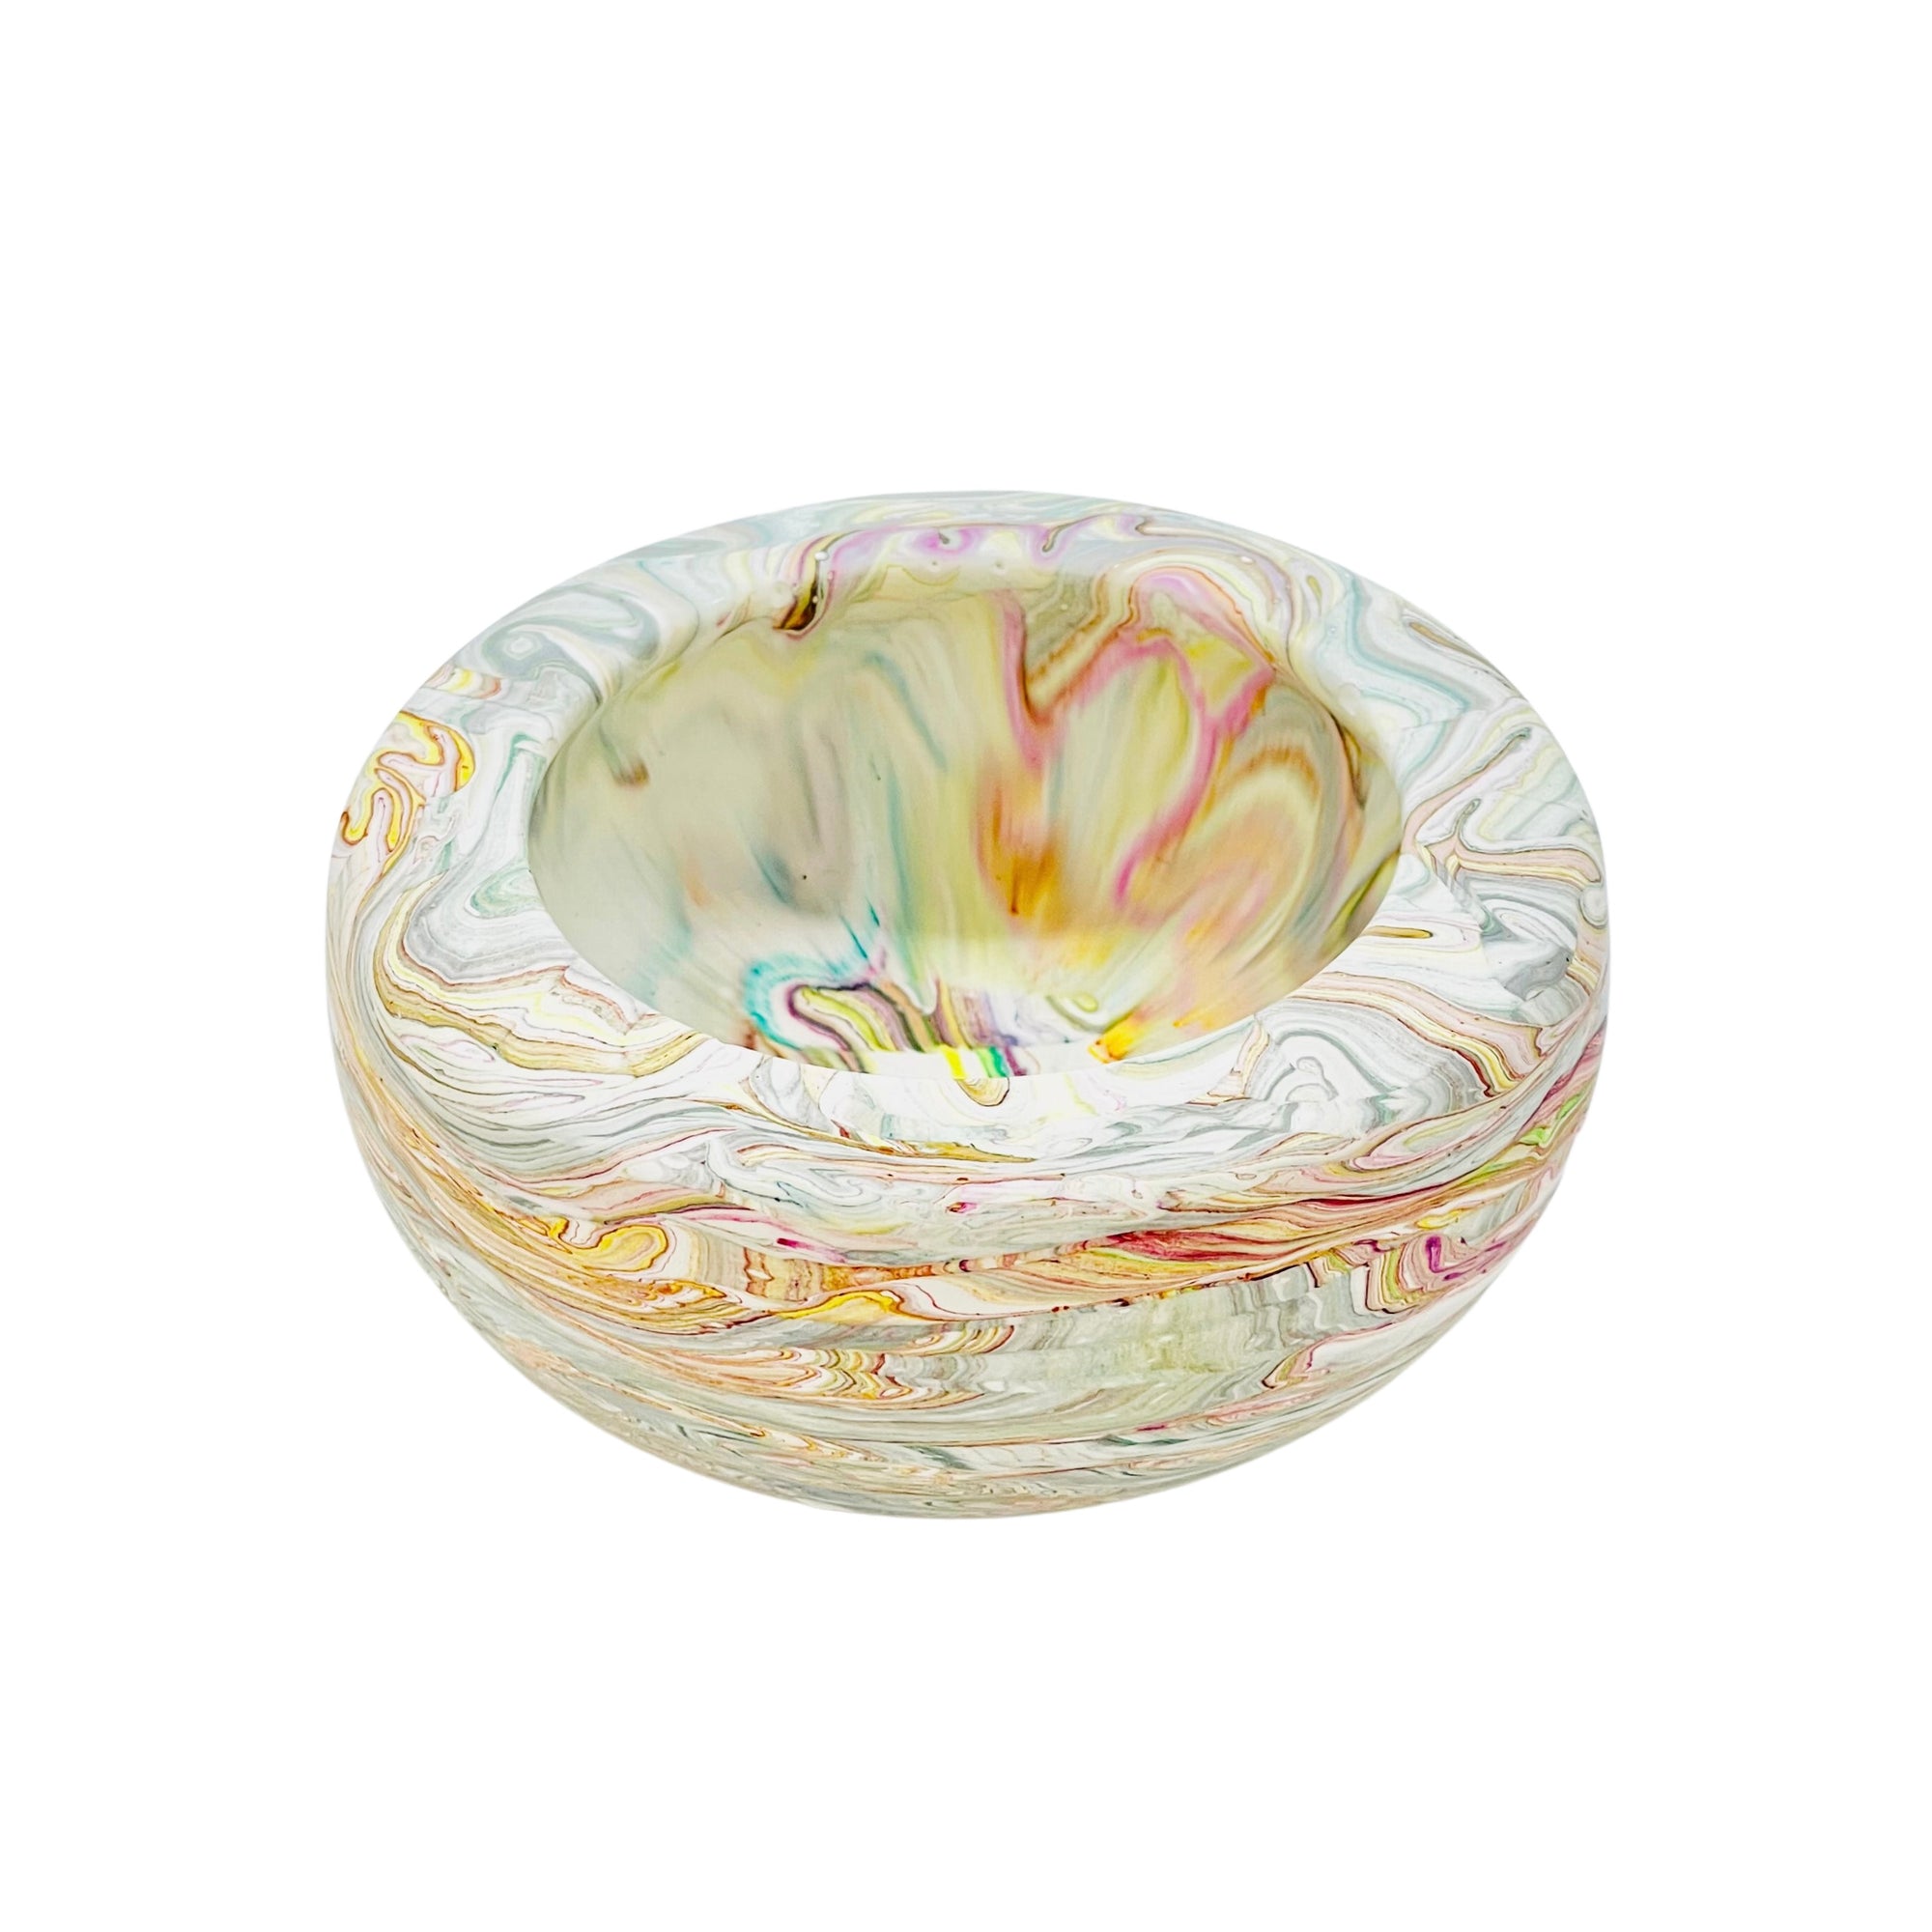 This small round jesmonite bowl measuring 10cm in diameter is marbled with multicolour pastel pigment.